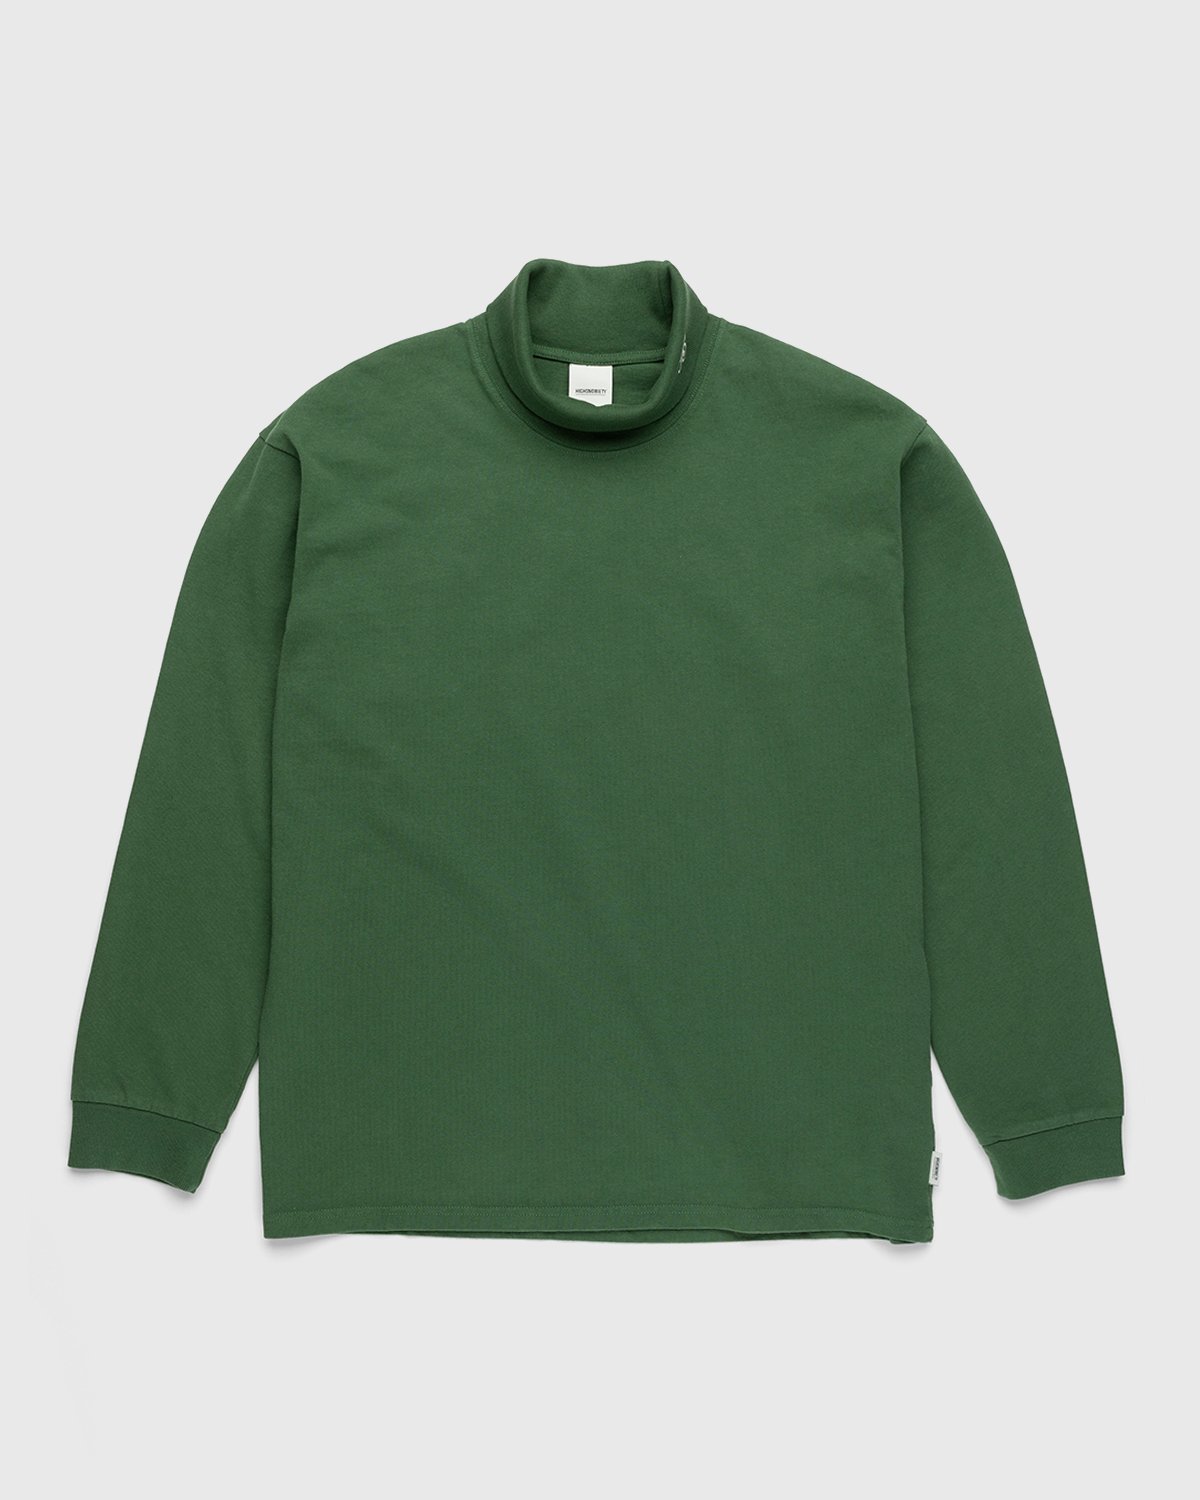 Highsnobiety - Heavy Staples Turtleneck Green - Clothing - Green - Image 1